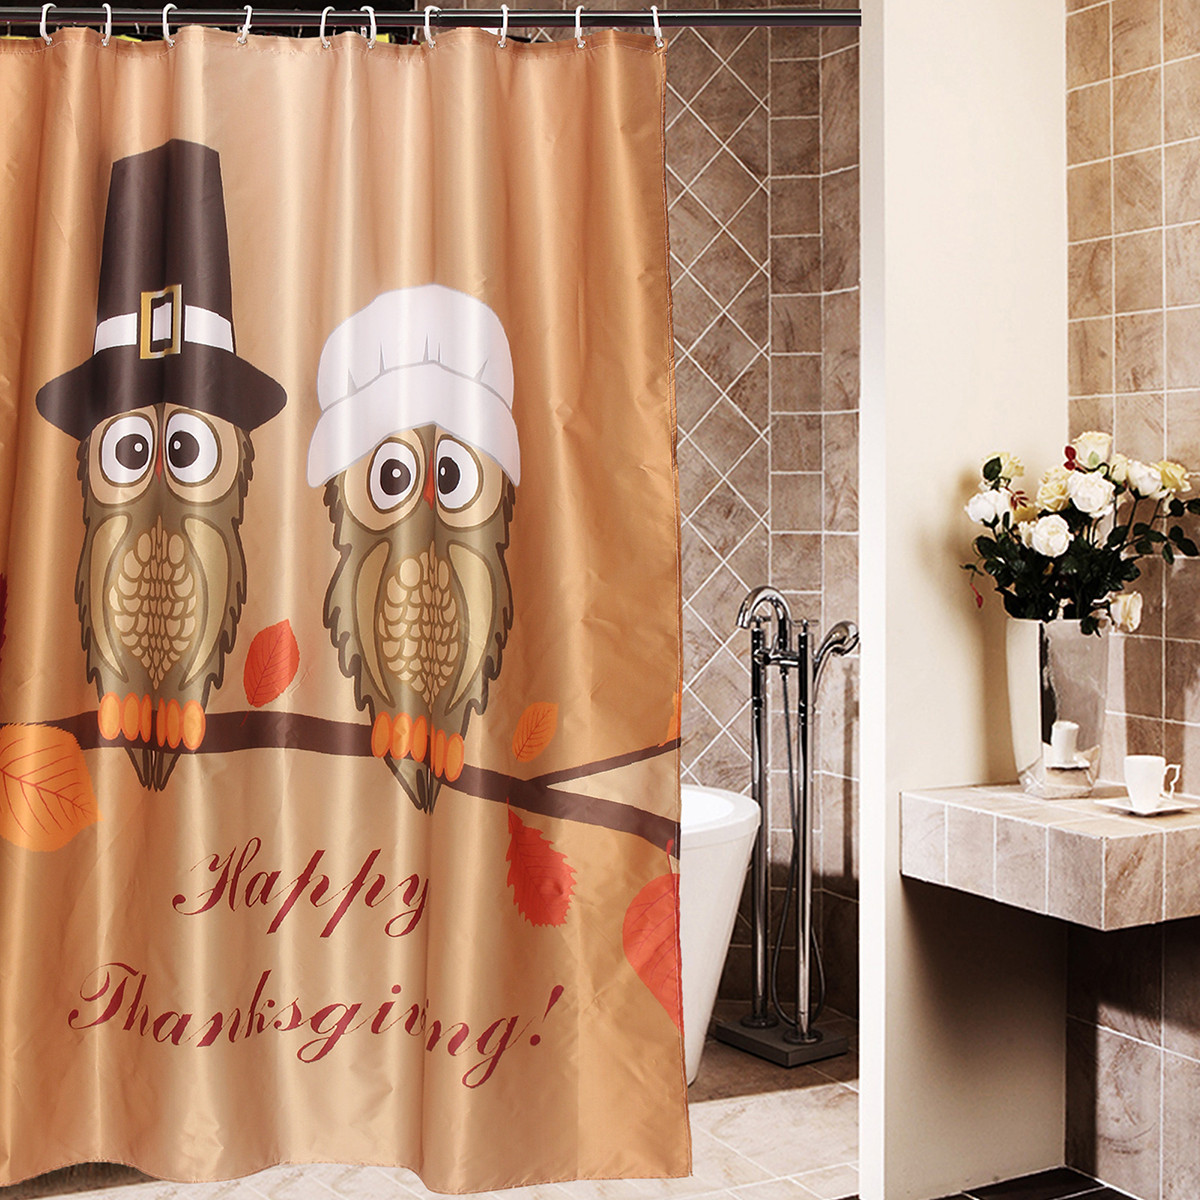 Thanksgiving Bathroom Set
 150x180cm Happy Thanksgiving Waterproof Shower Curtain